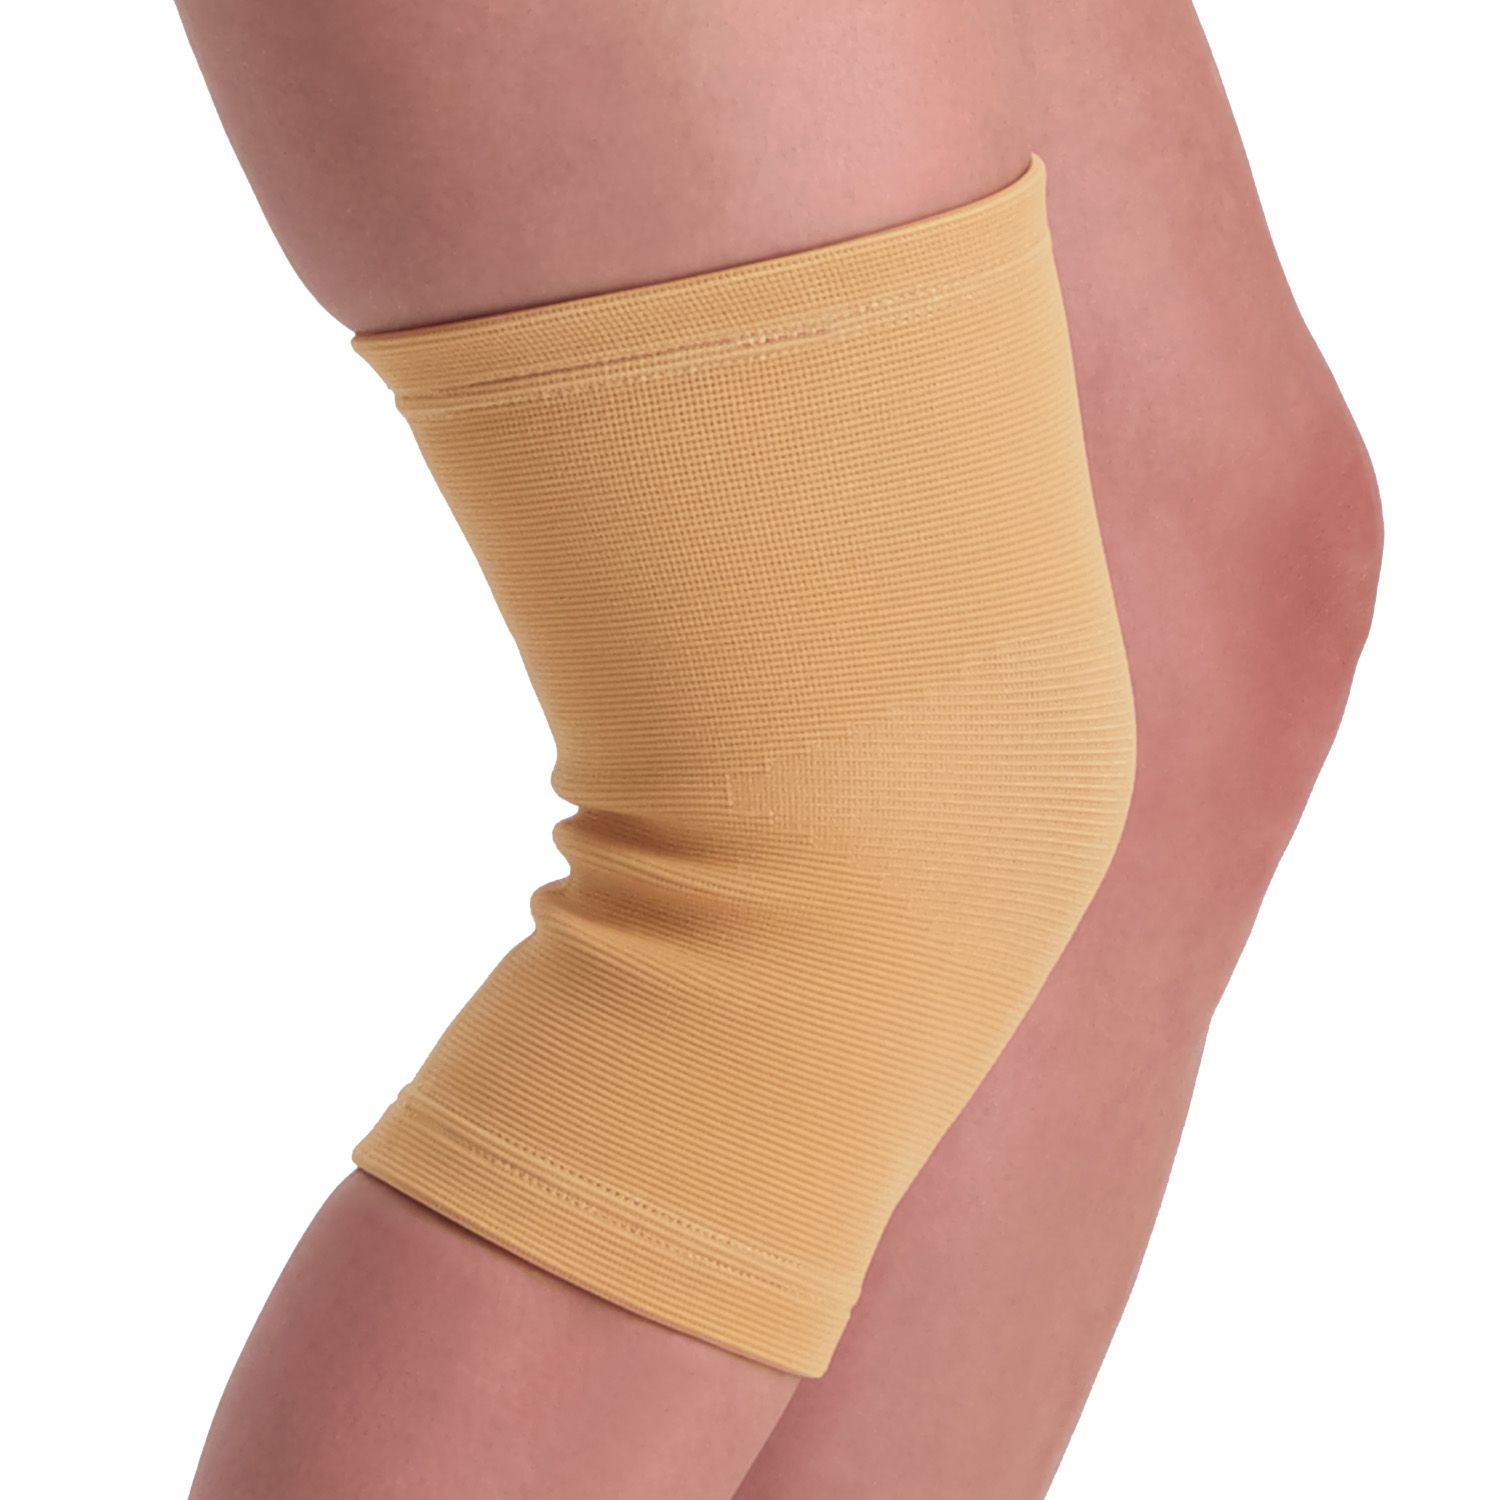 Dunimed knee sleeve side view